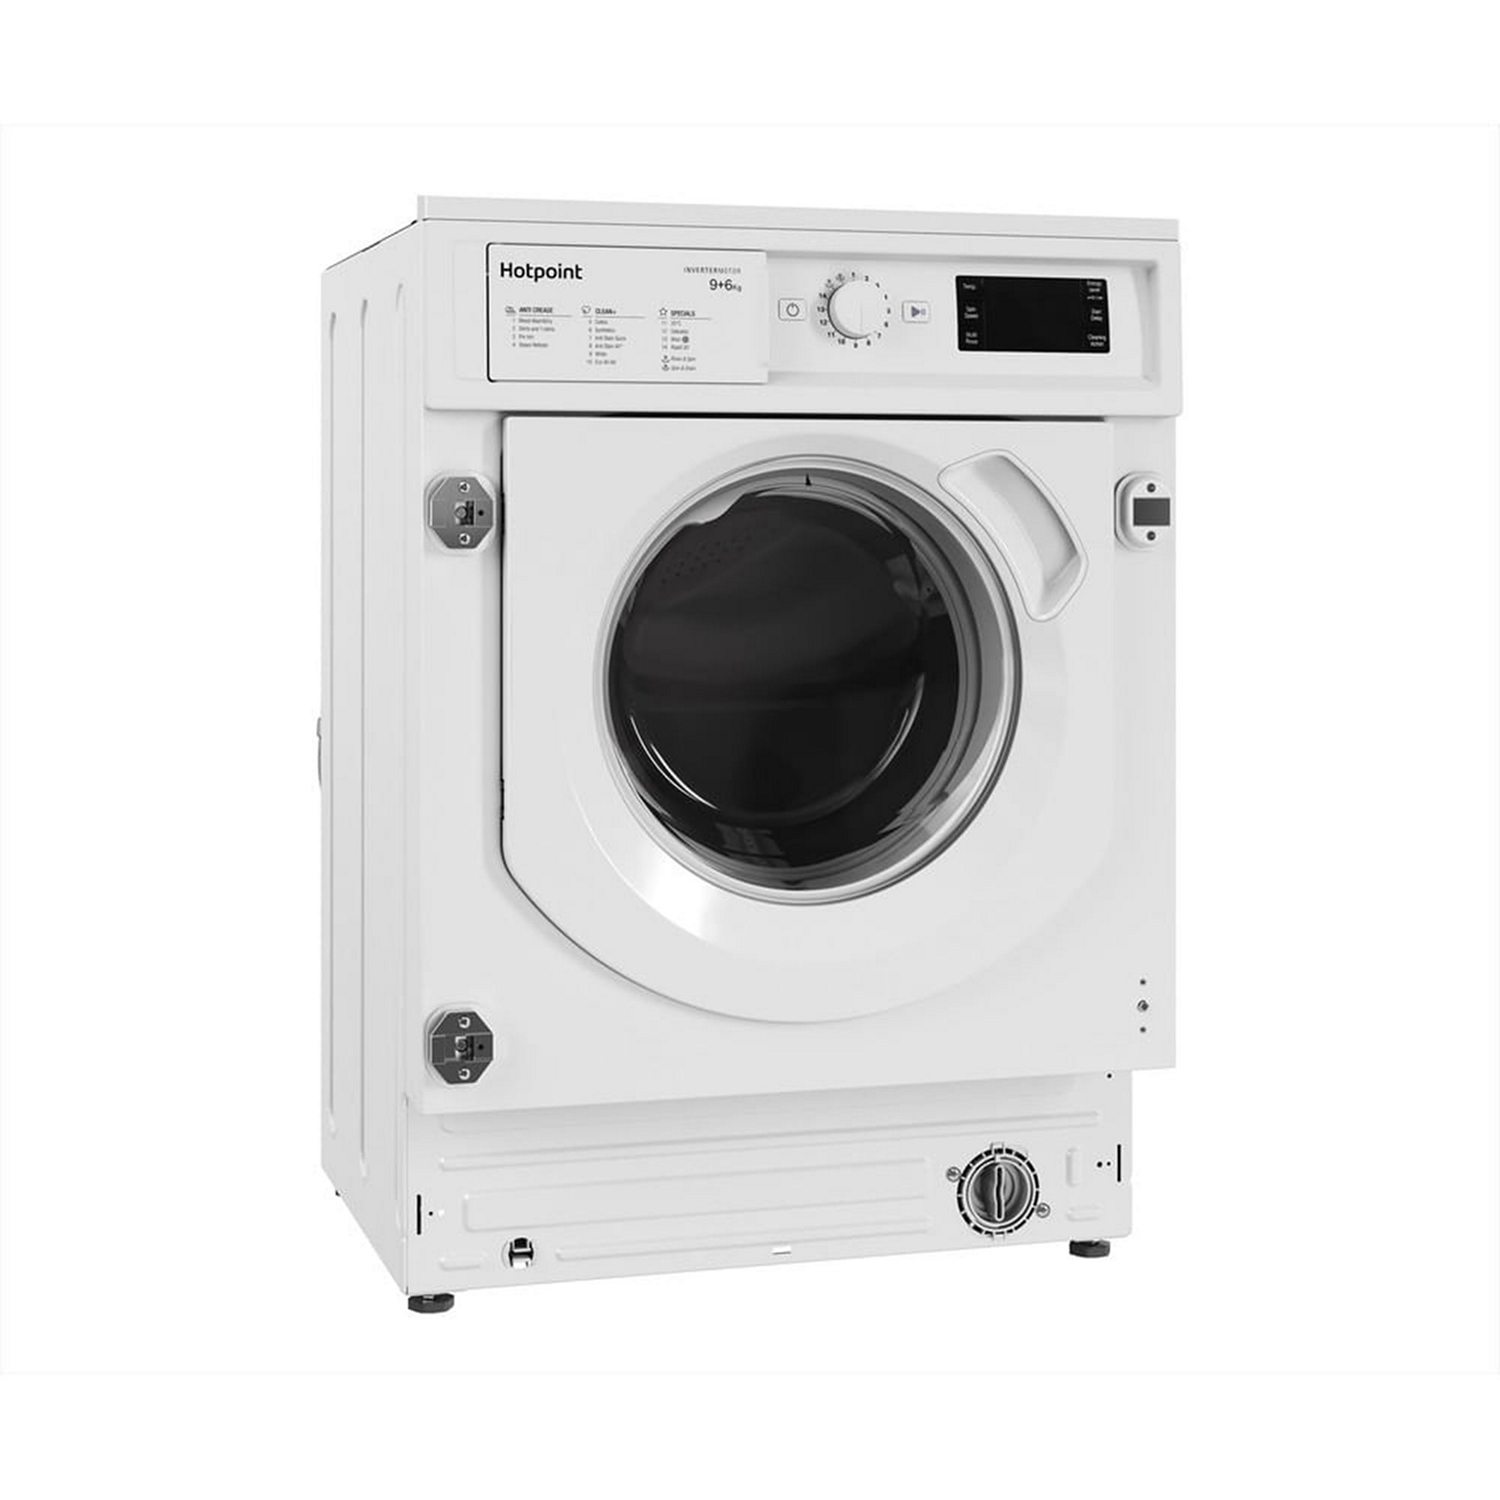 Integrated 9 kg Washer Dryer